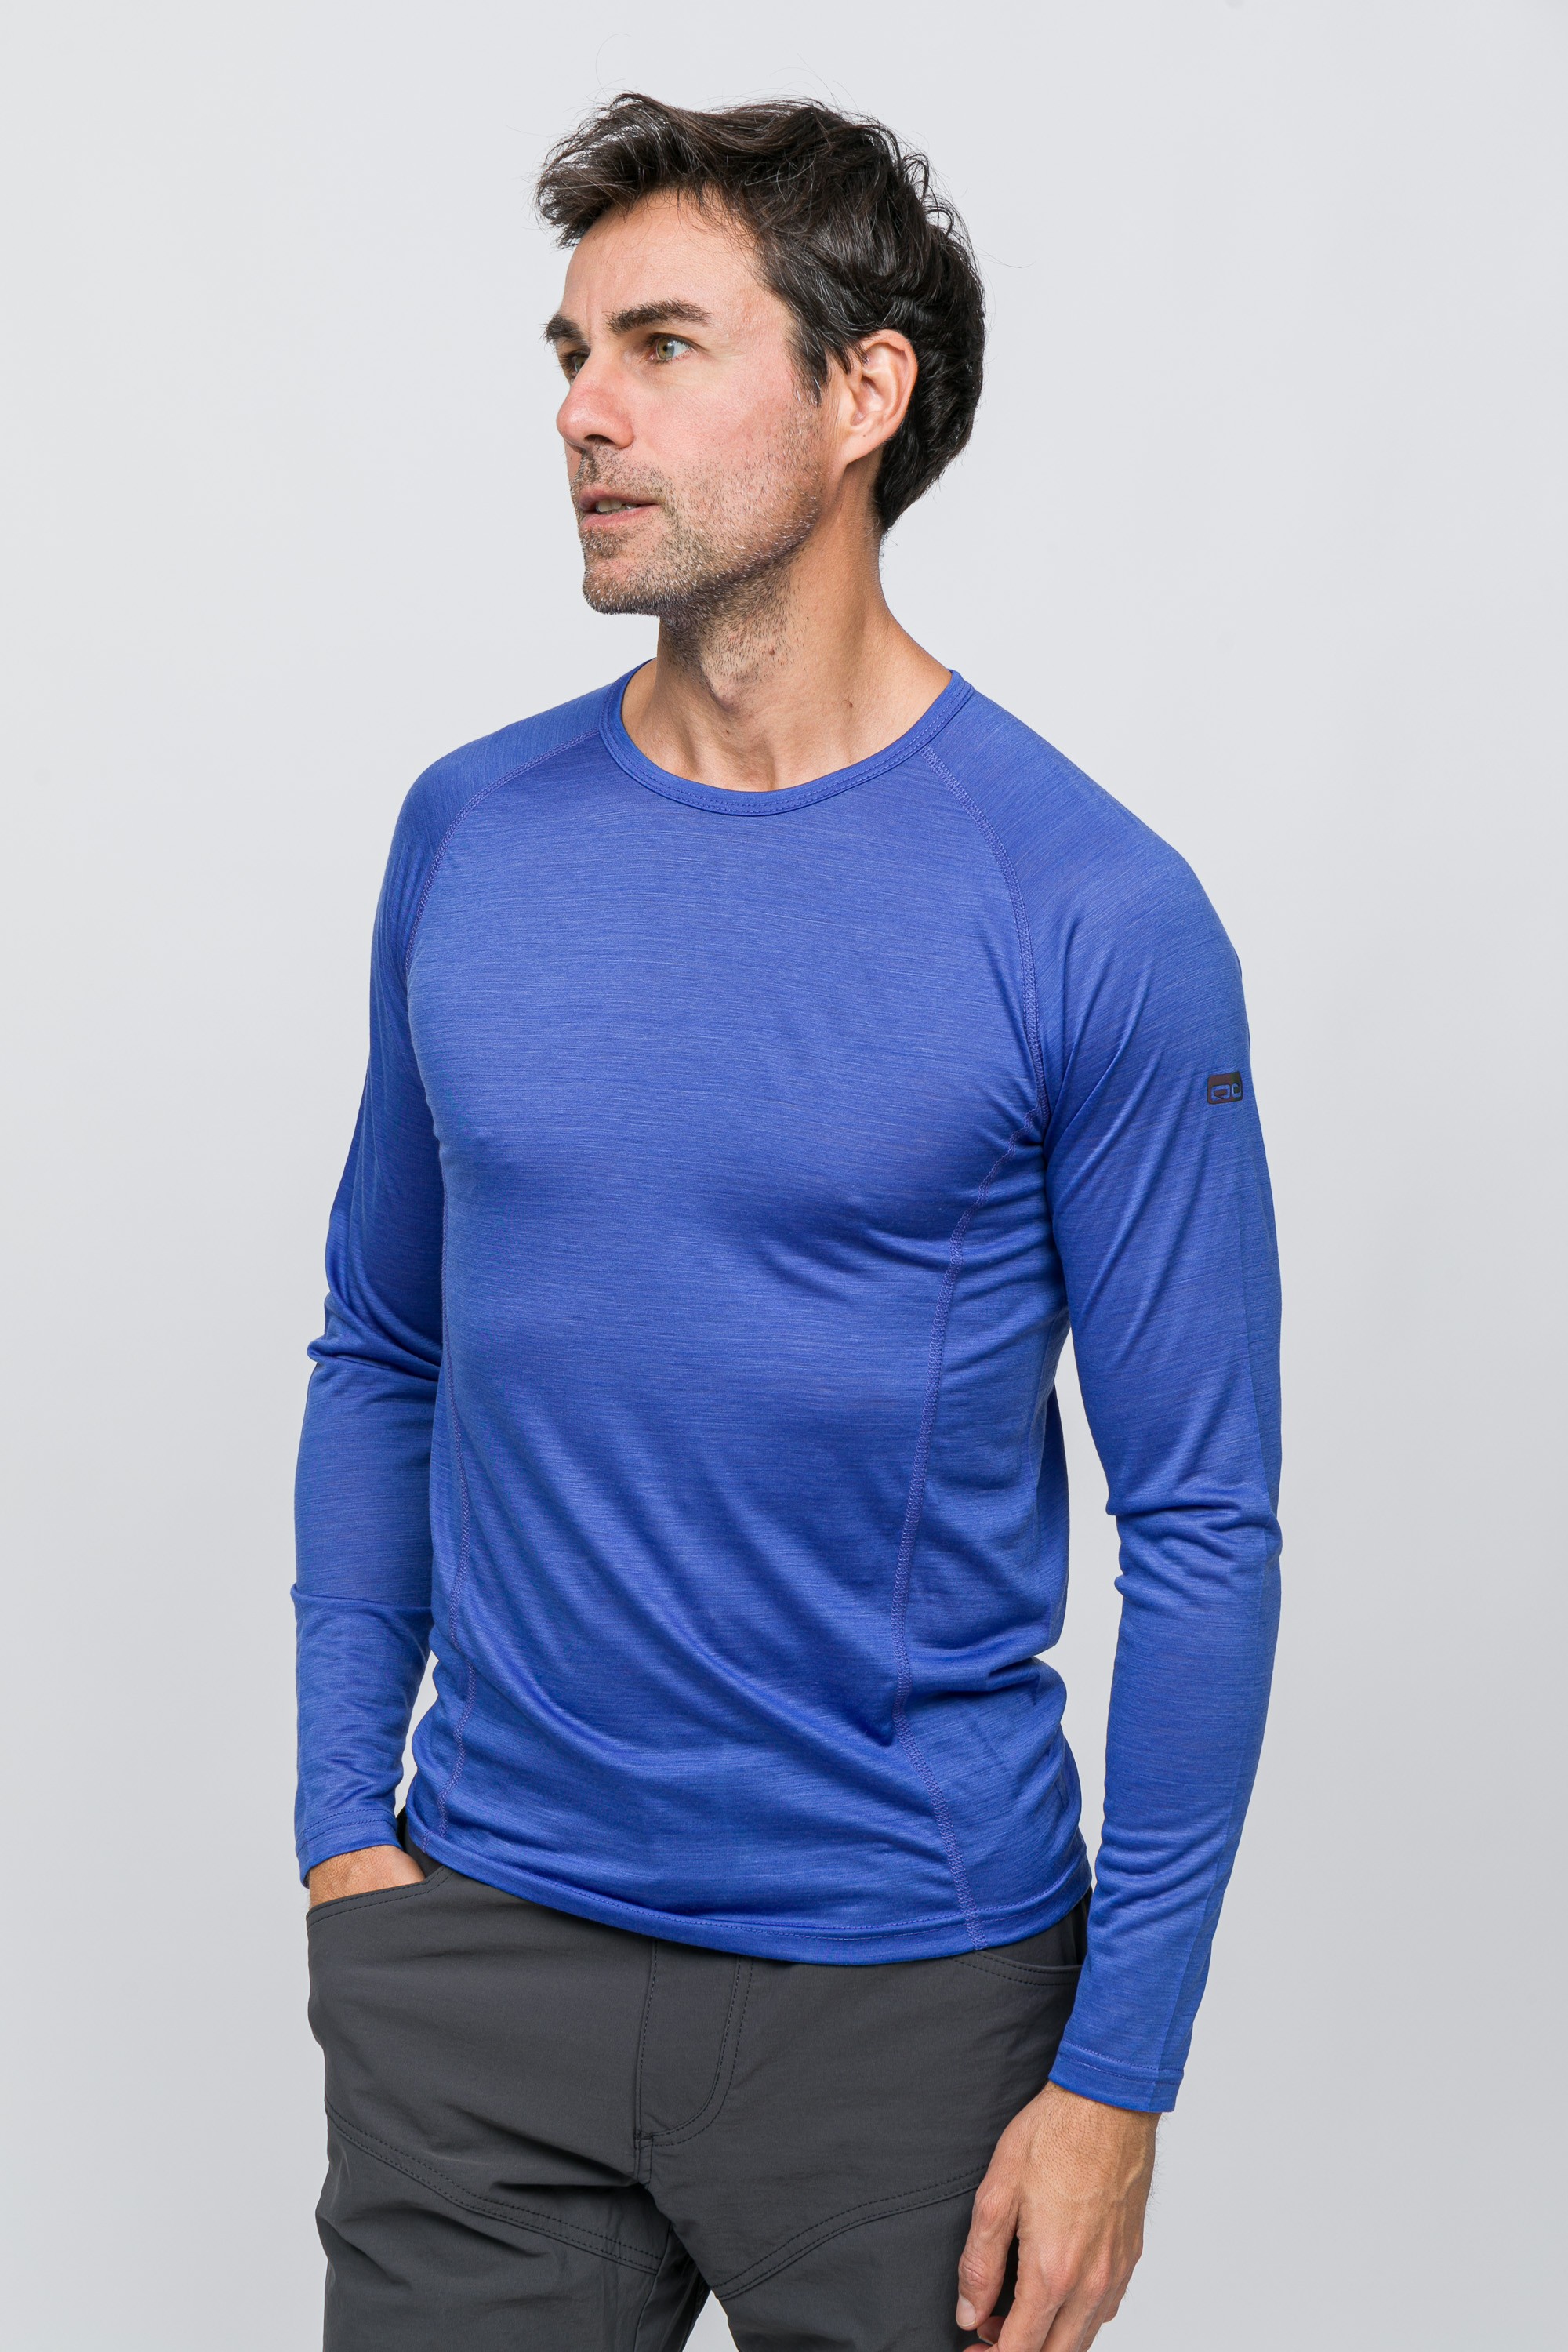 All-Season Merino Uzun Kollu T-Shirt 135 gr - Mavi